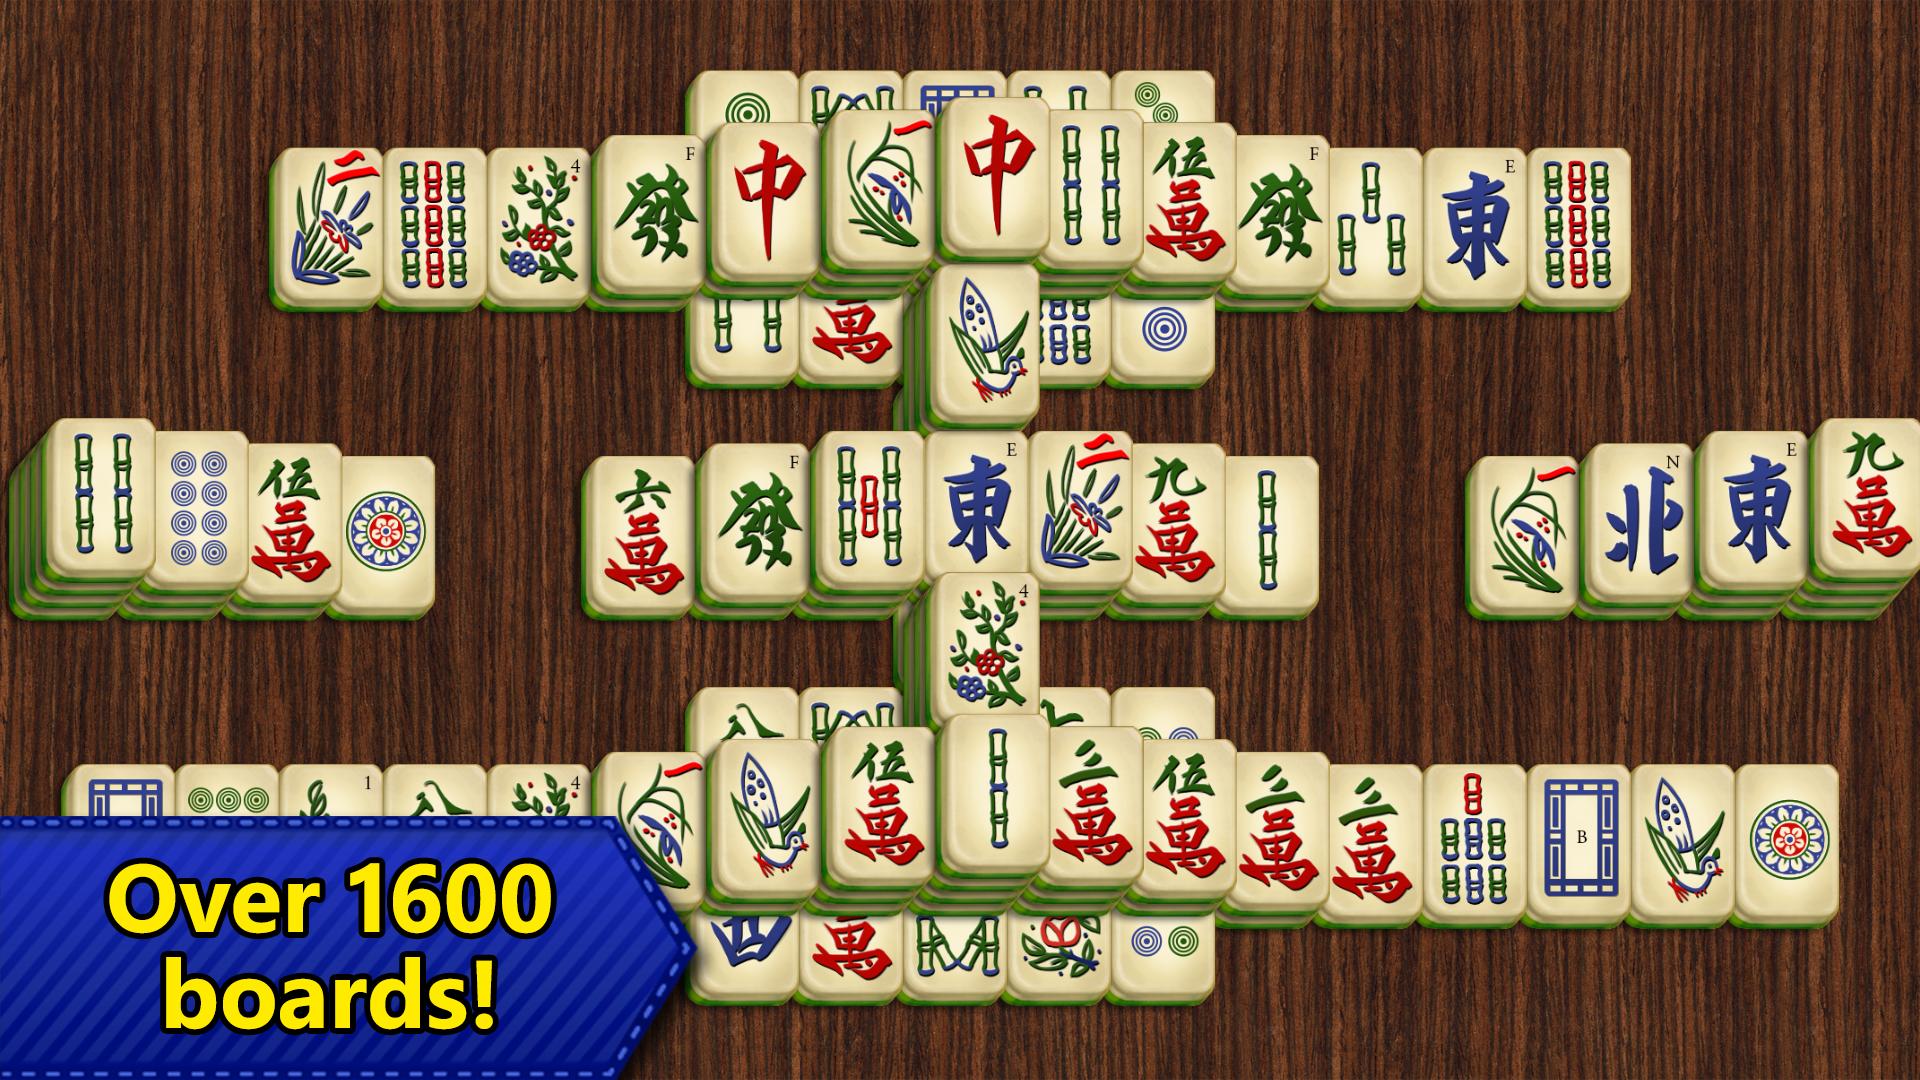 Solo mahjong. Маджонг. Маджонг (пасьянс). Маджонг пасьянс Солитер. Маджонг игровое поле.